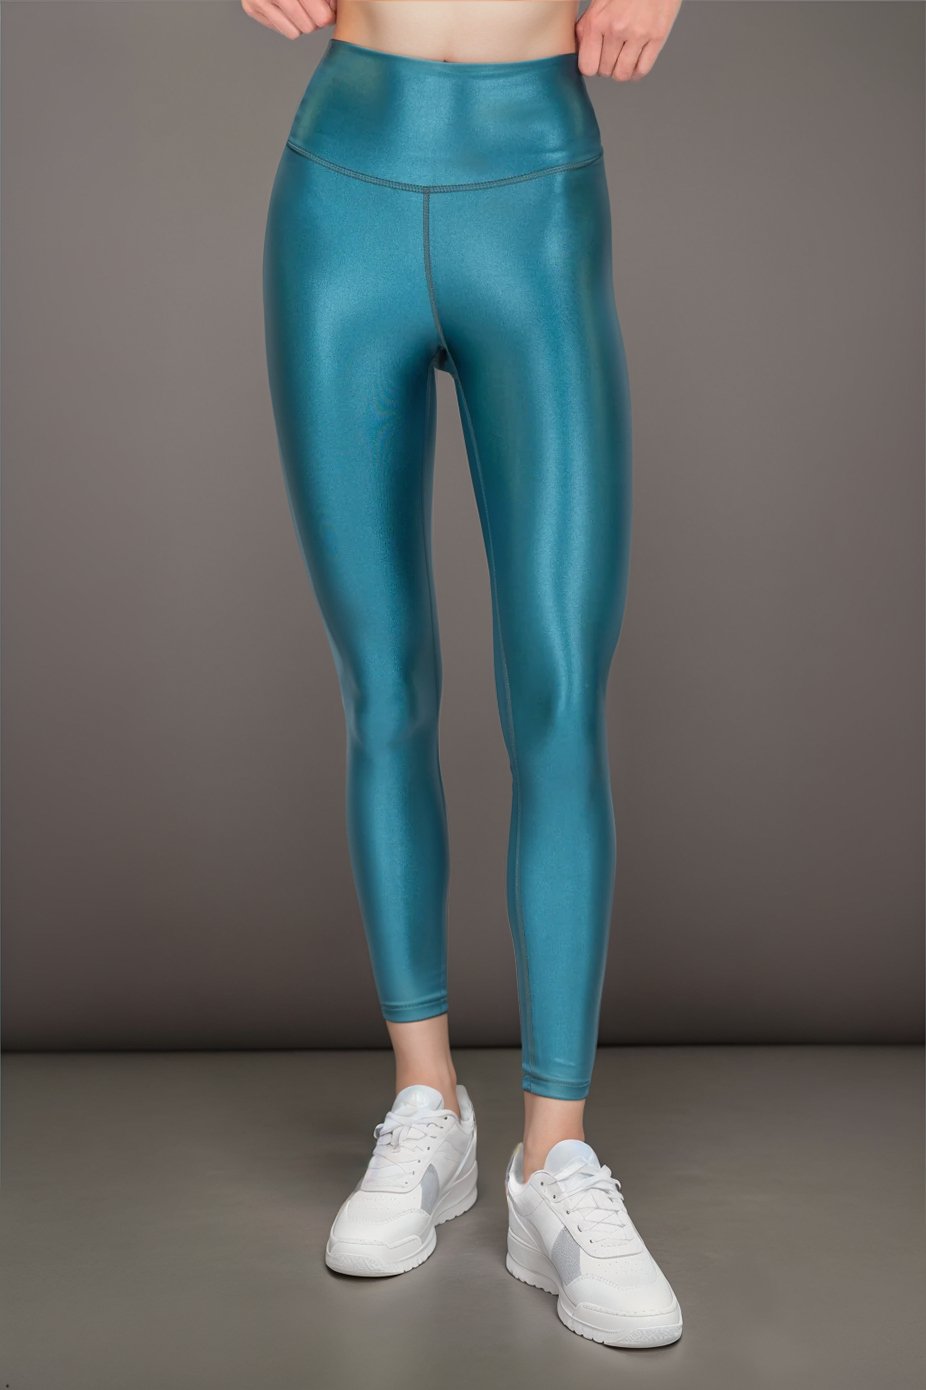 Buy Bhetvastu Leggings For Women Blue Shining Lycra (Size XL) Shiny Leggings  at